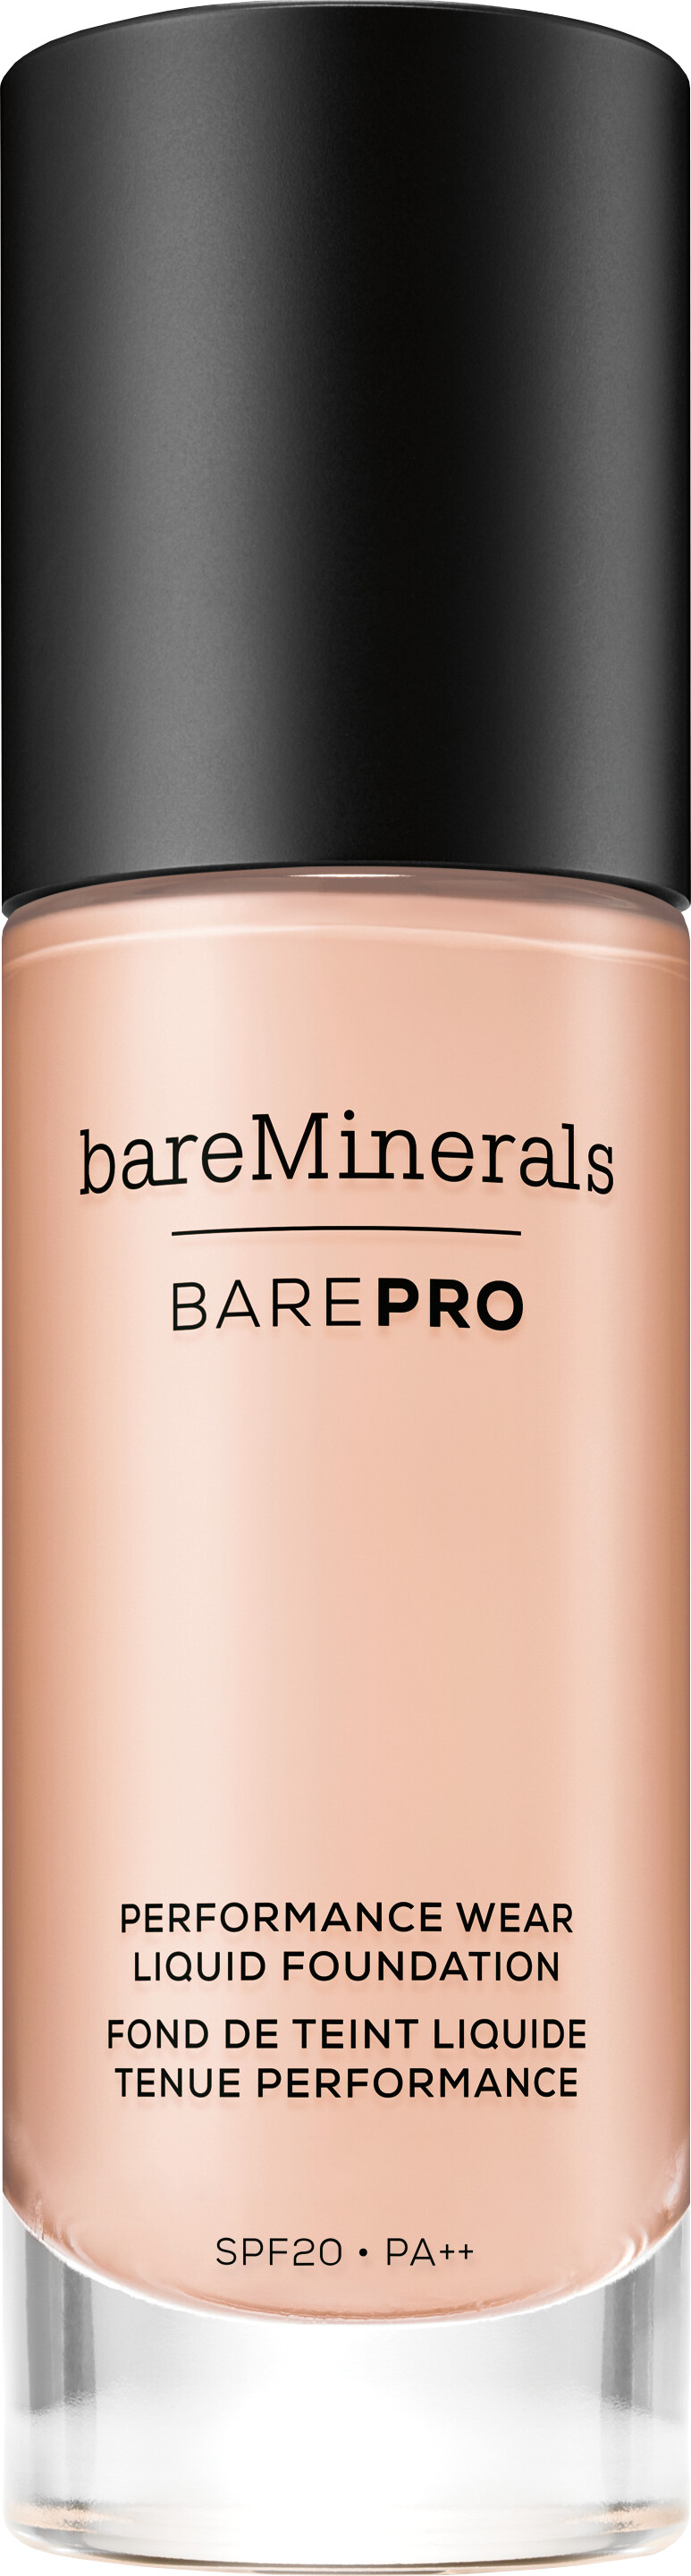 bareMinerals BAREPRO Performance Wear Liquid Foundation SPF20 30ml 0.5 - Porcelain